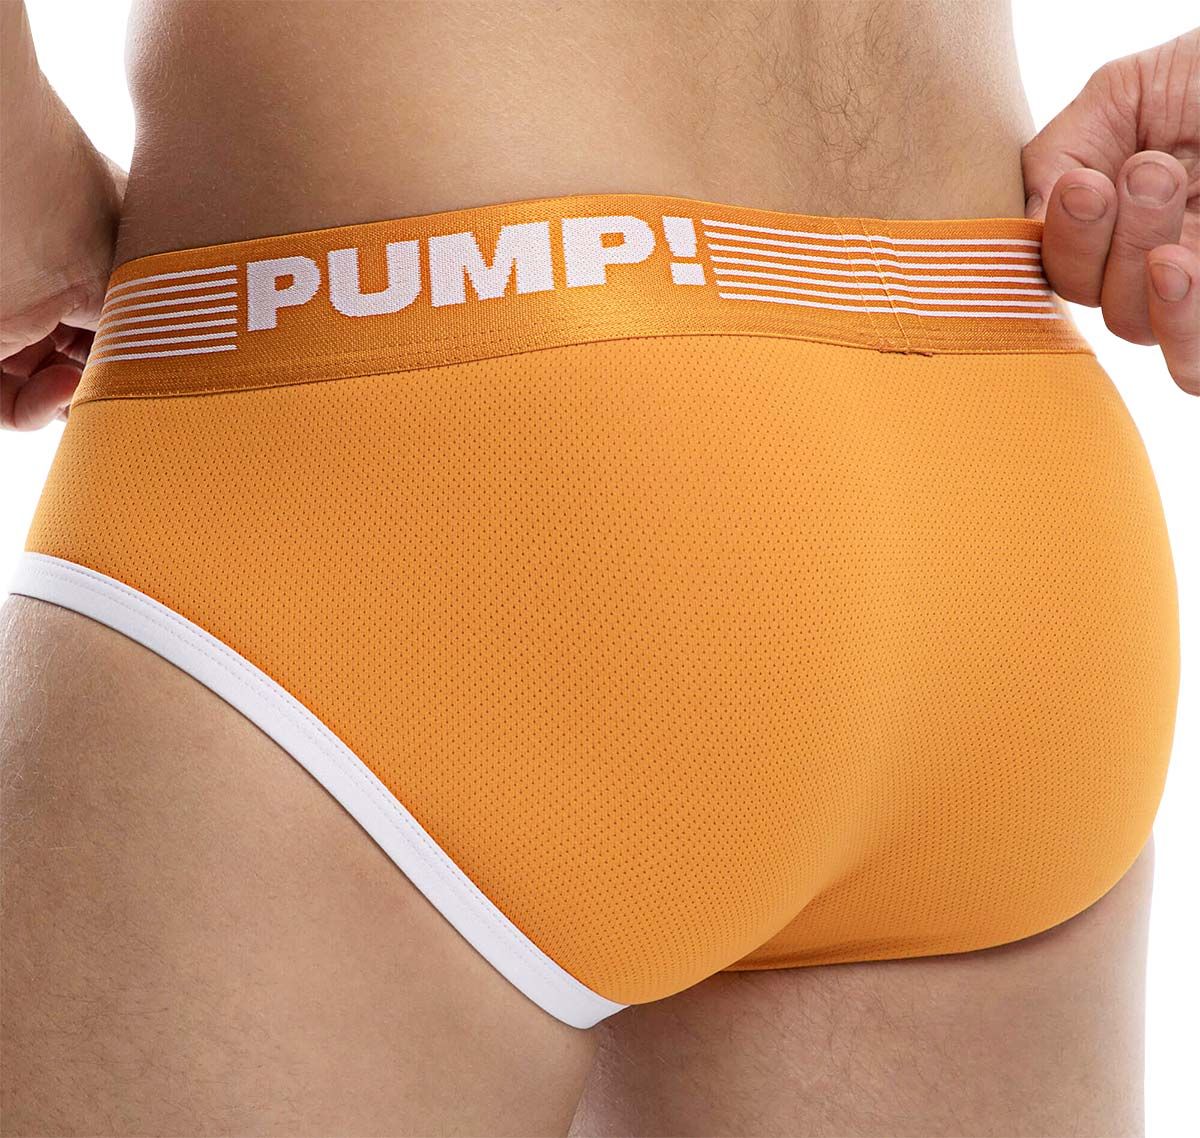 PUMP! Slip CREAMSICLE BRIEF 12046, orange